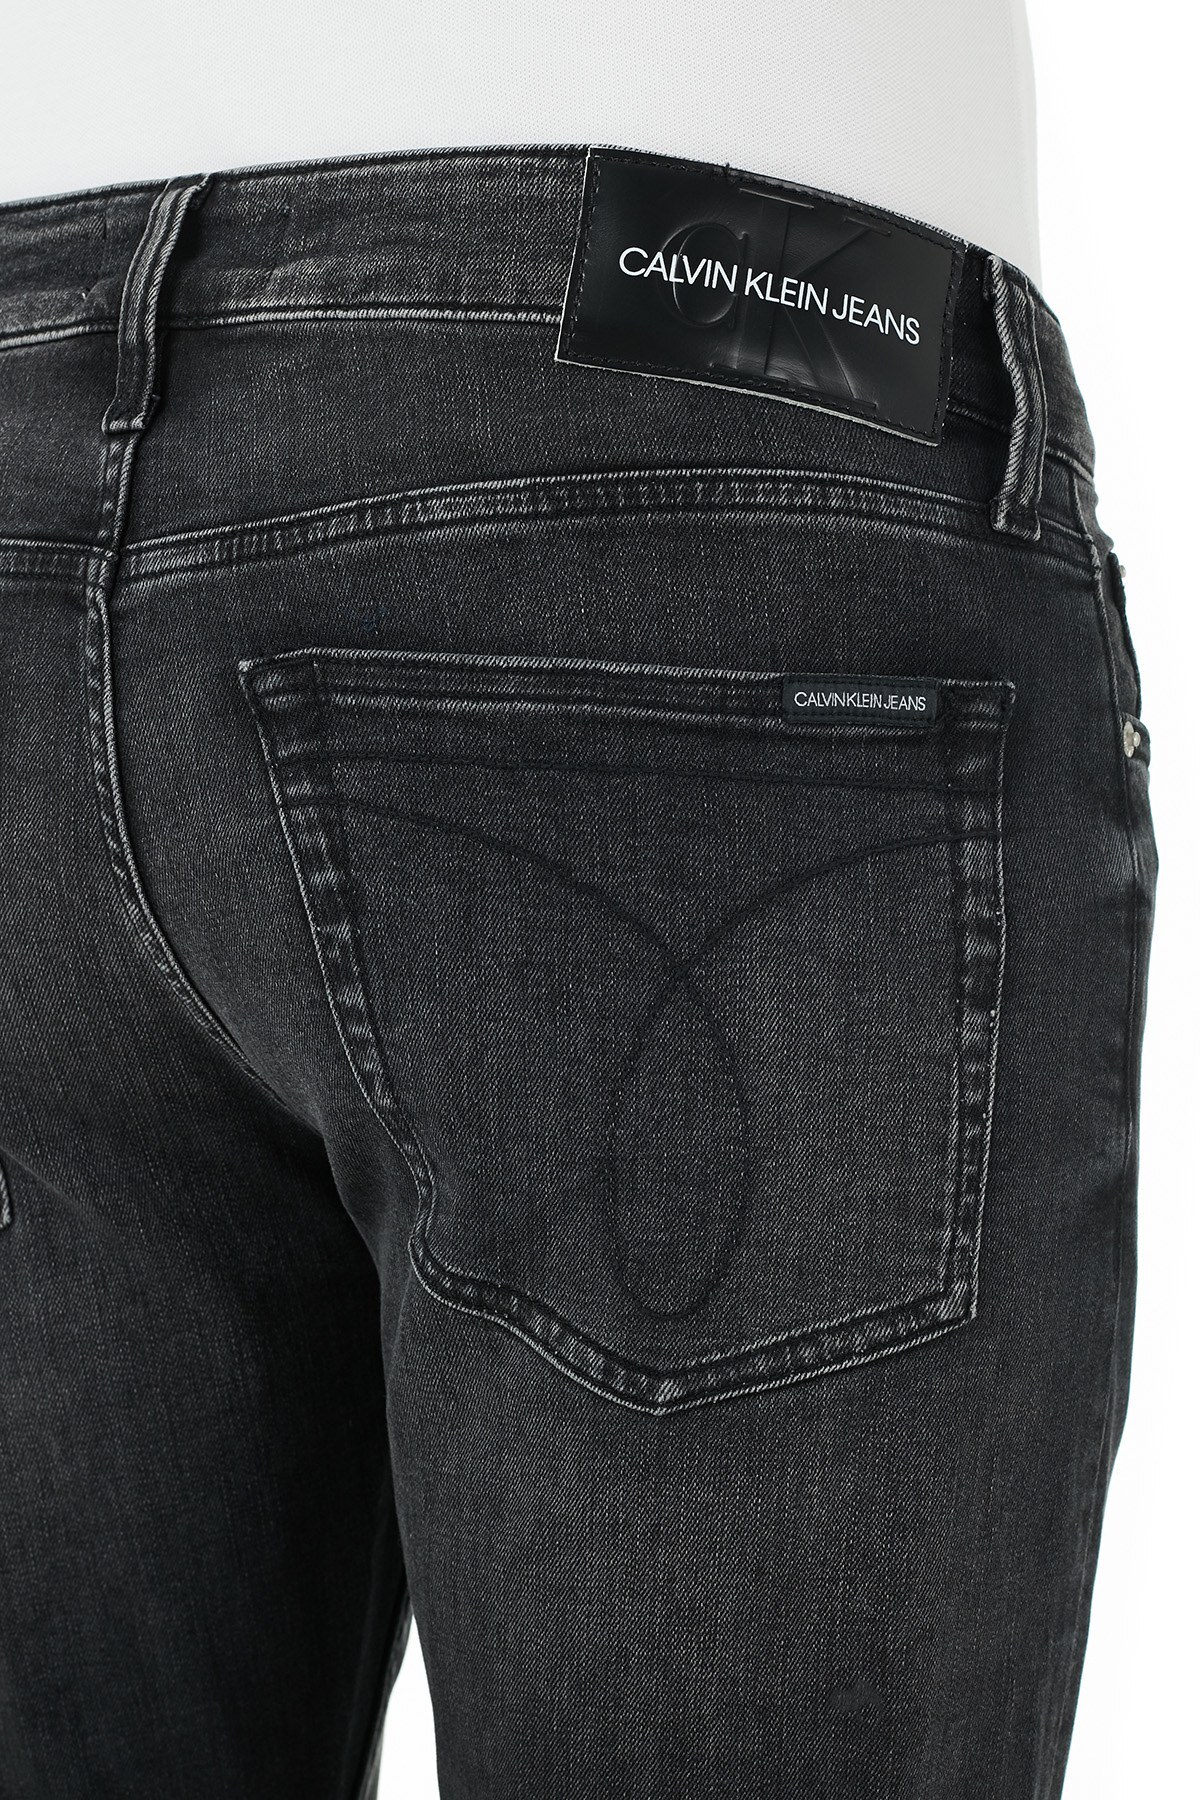 Calvin Klein Slim Fit Düşük Bel Pamuklu Jeans Erkek Kot Pantolon J30J315566 1BY SİYAH